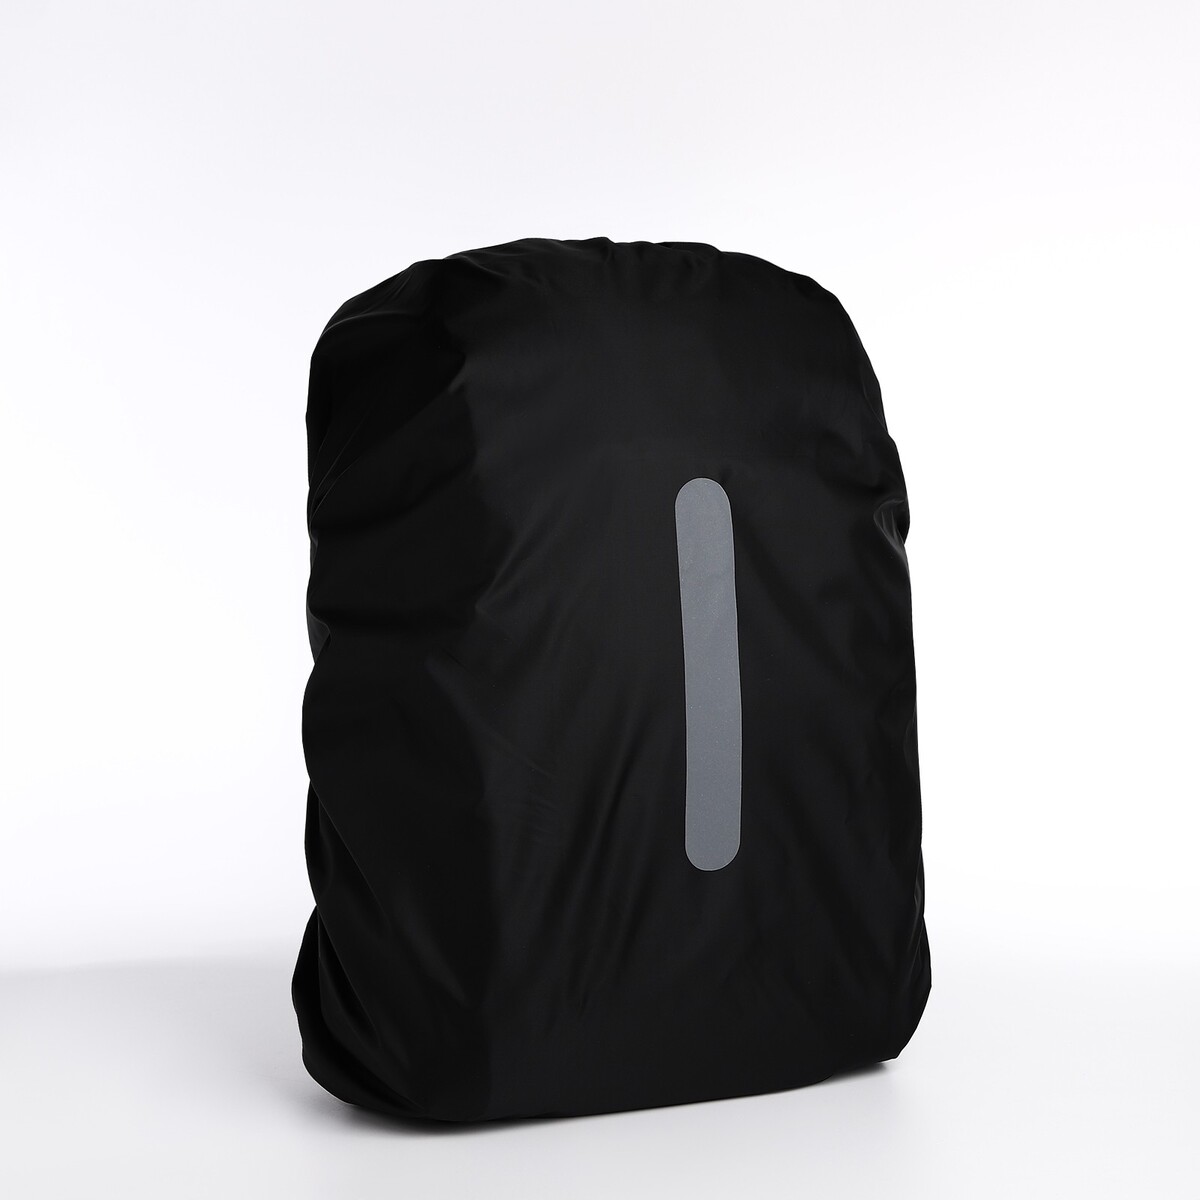 Чехол на рюкзак водоотталкивающий, объем 80 л, цвет черный чехол на рюкзак 60 л